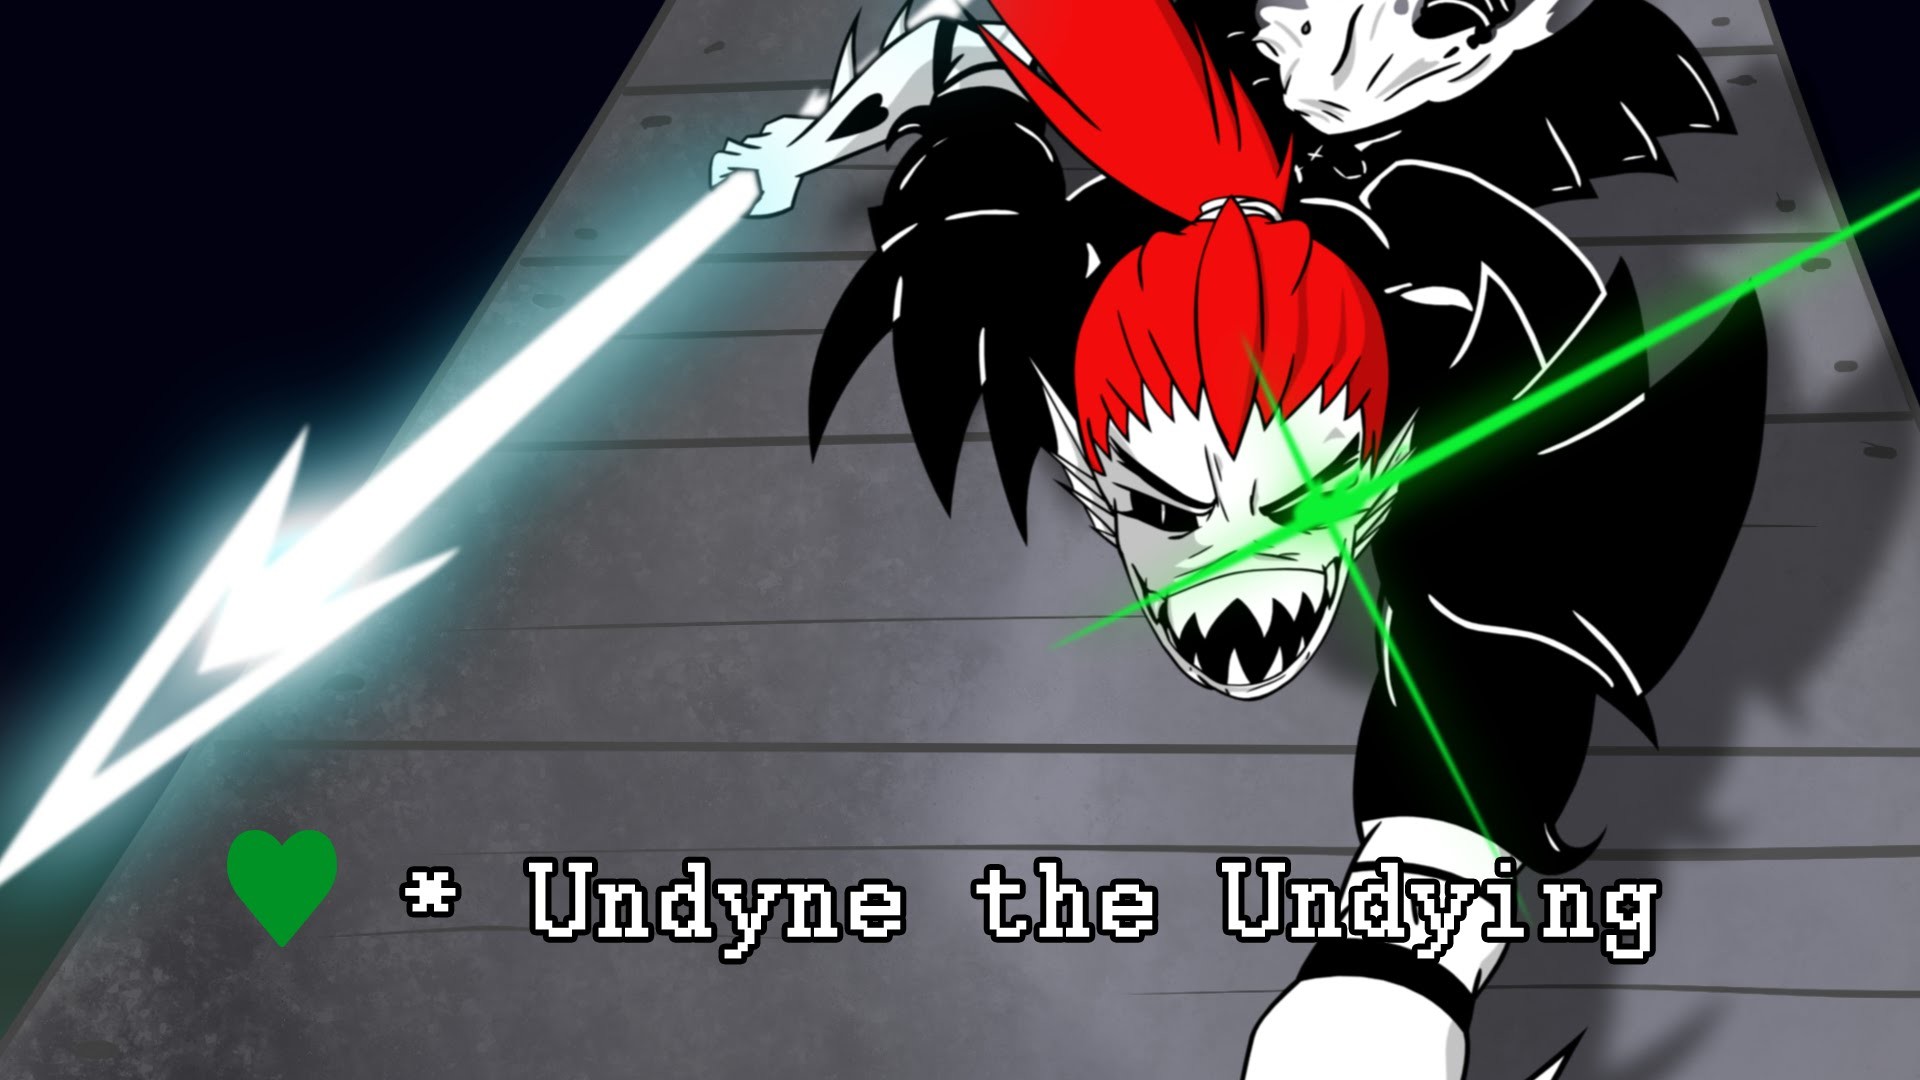 1920x1080 Undyne the Undying – Undertale parody animation - (Unusualbox) - YouTube